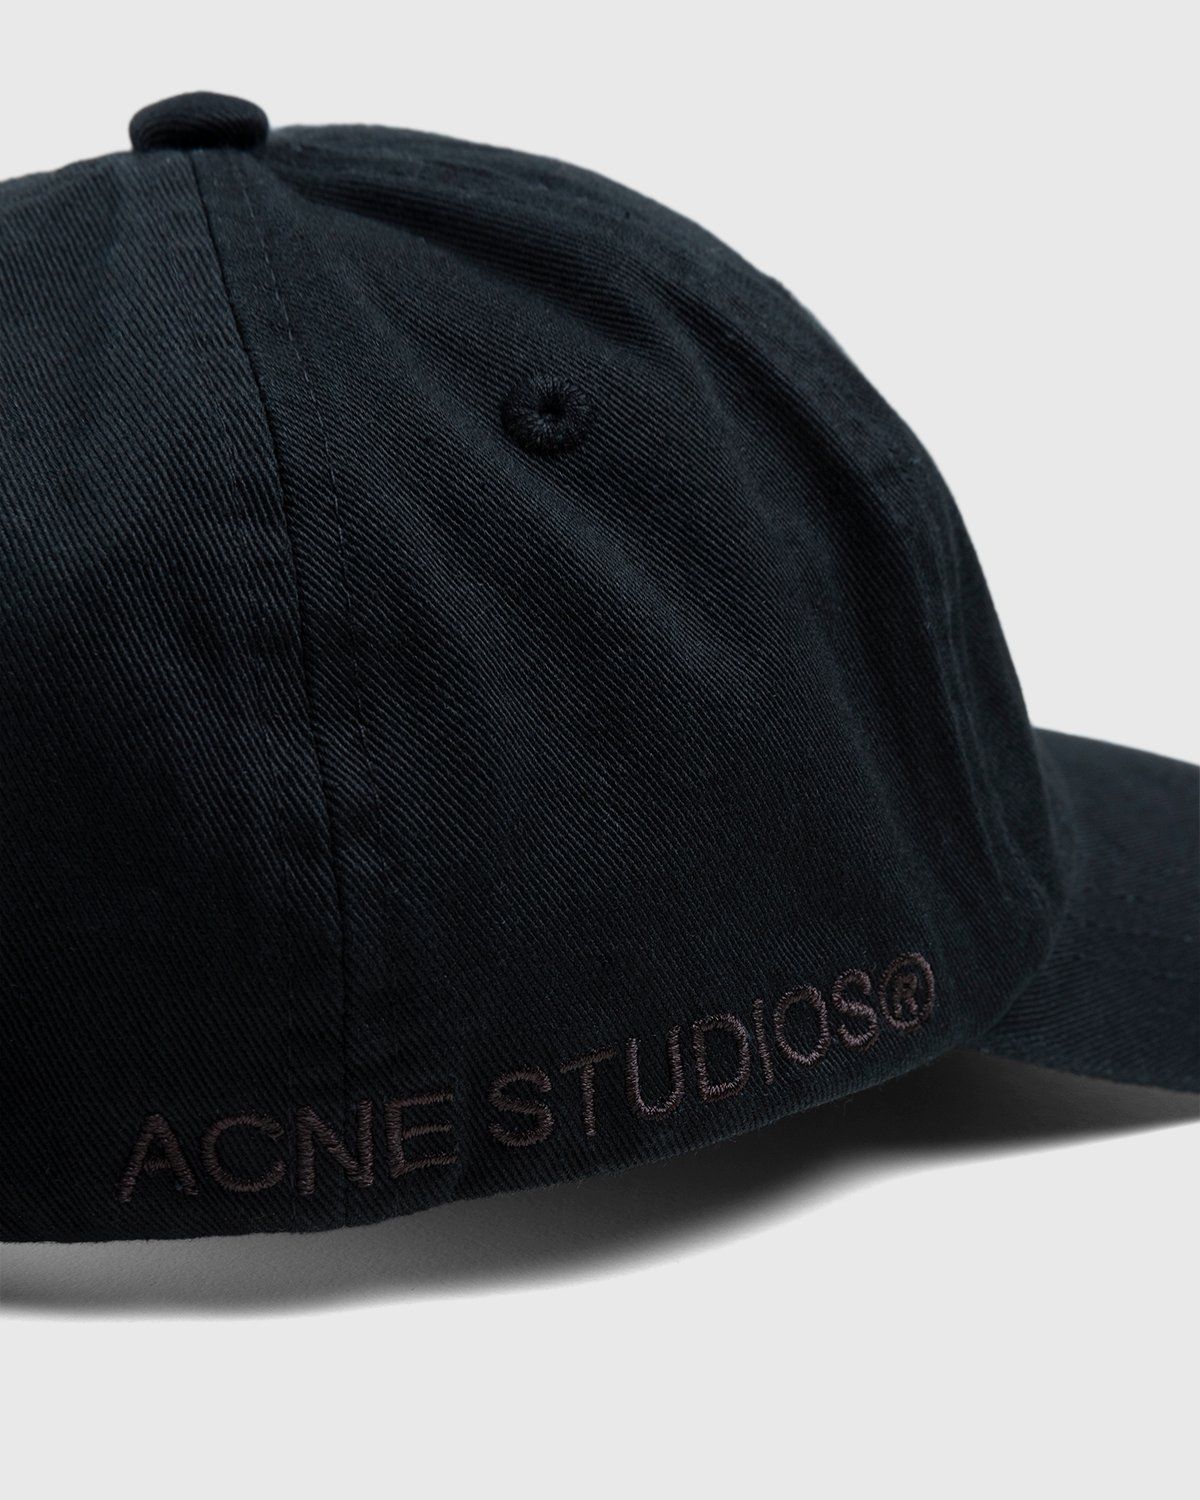 Acne Studios – Cotton Baseball Cap Black - Image 5